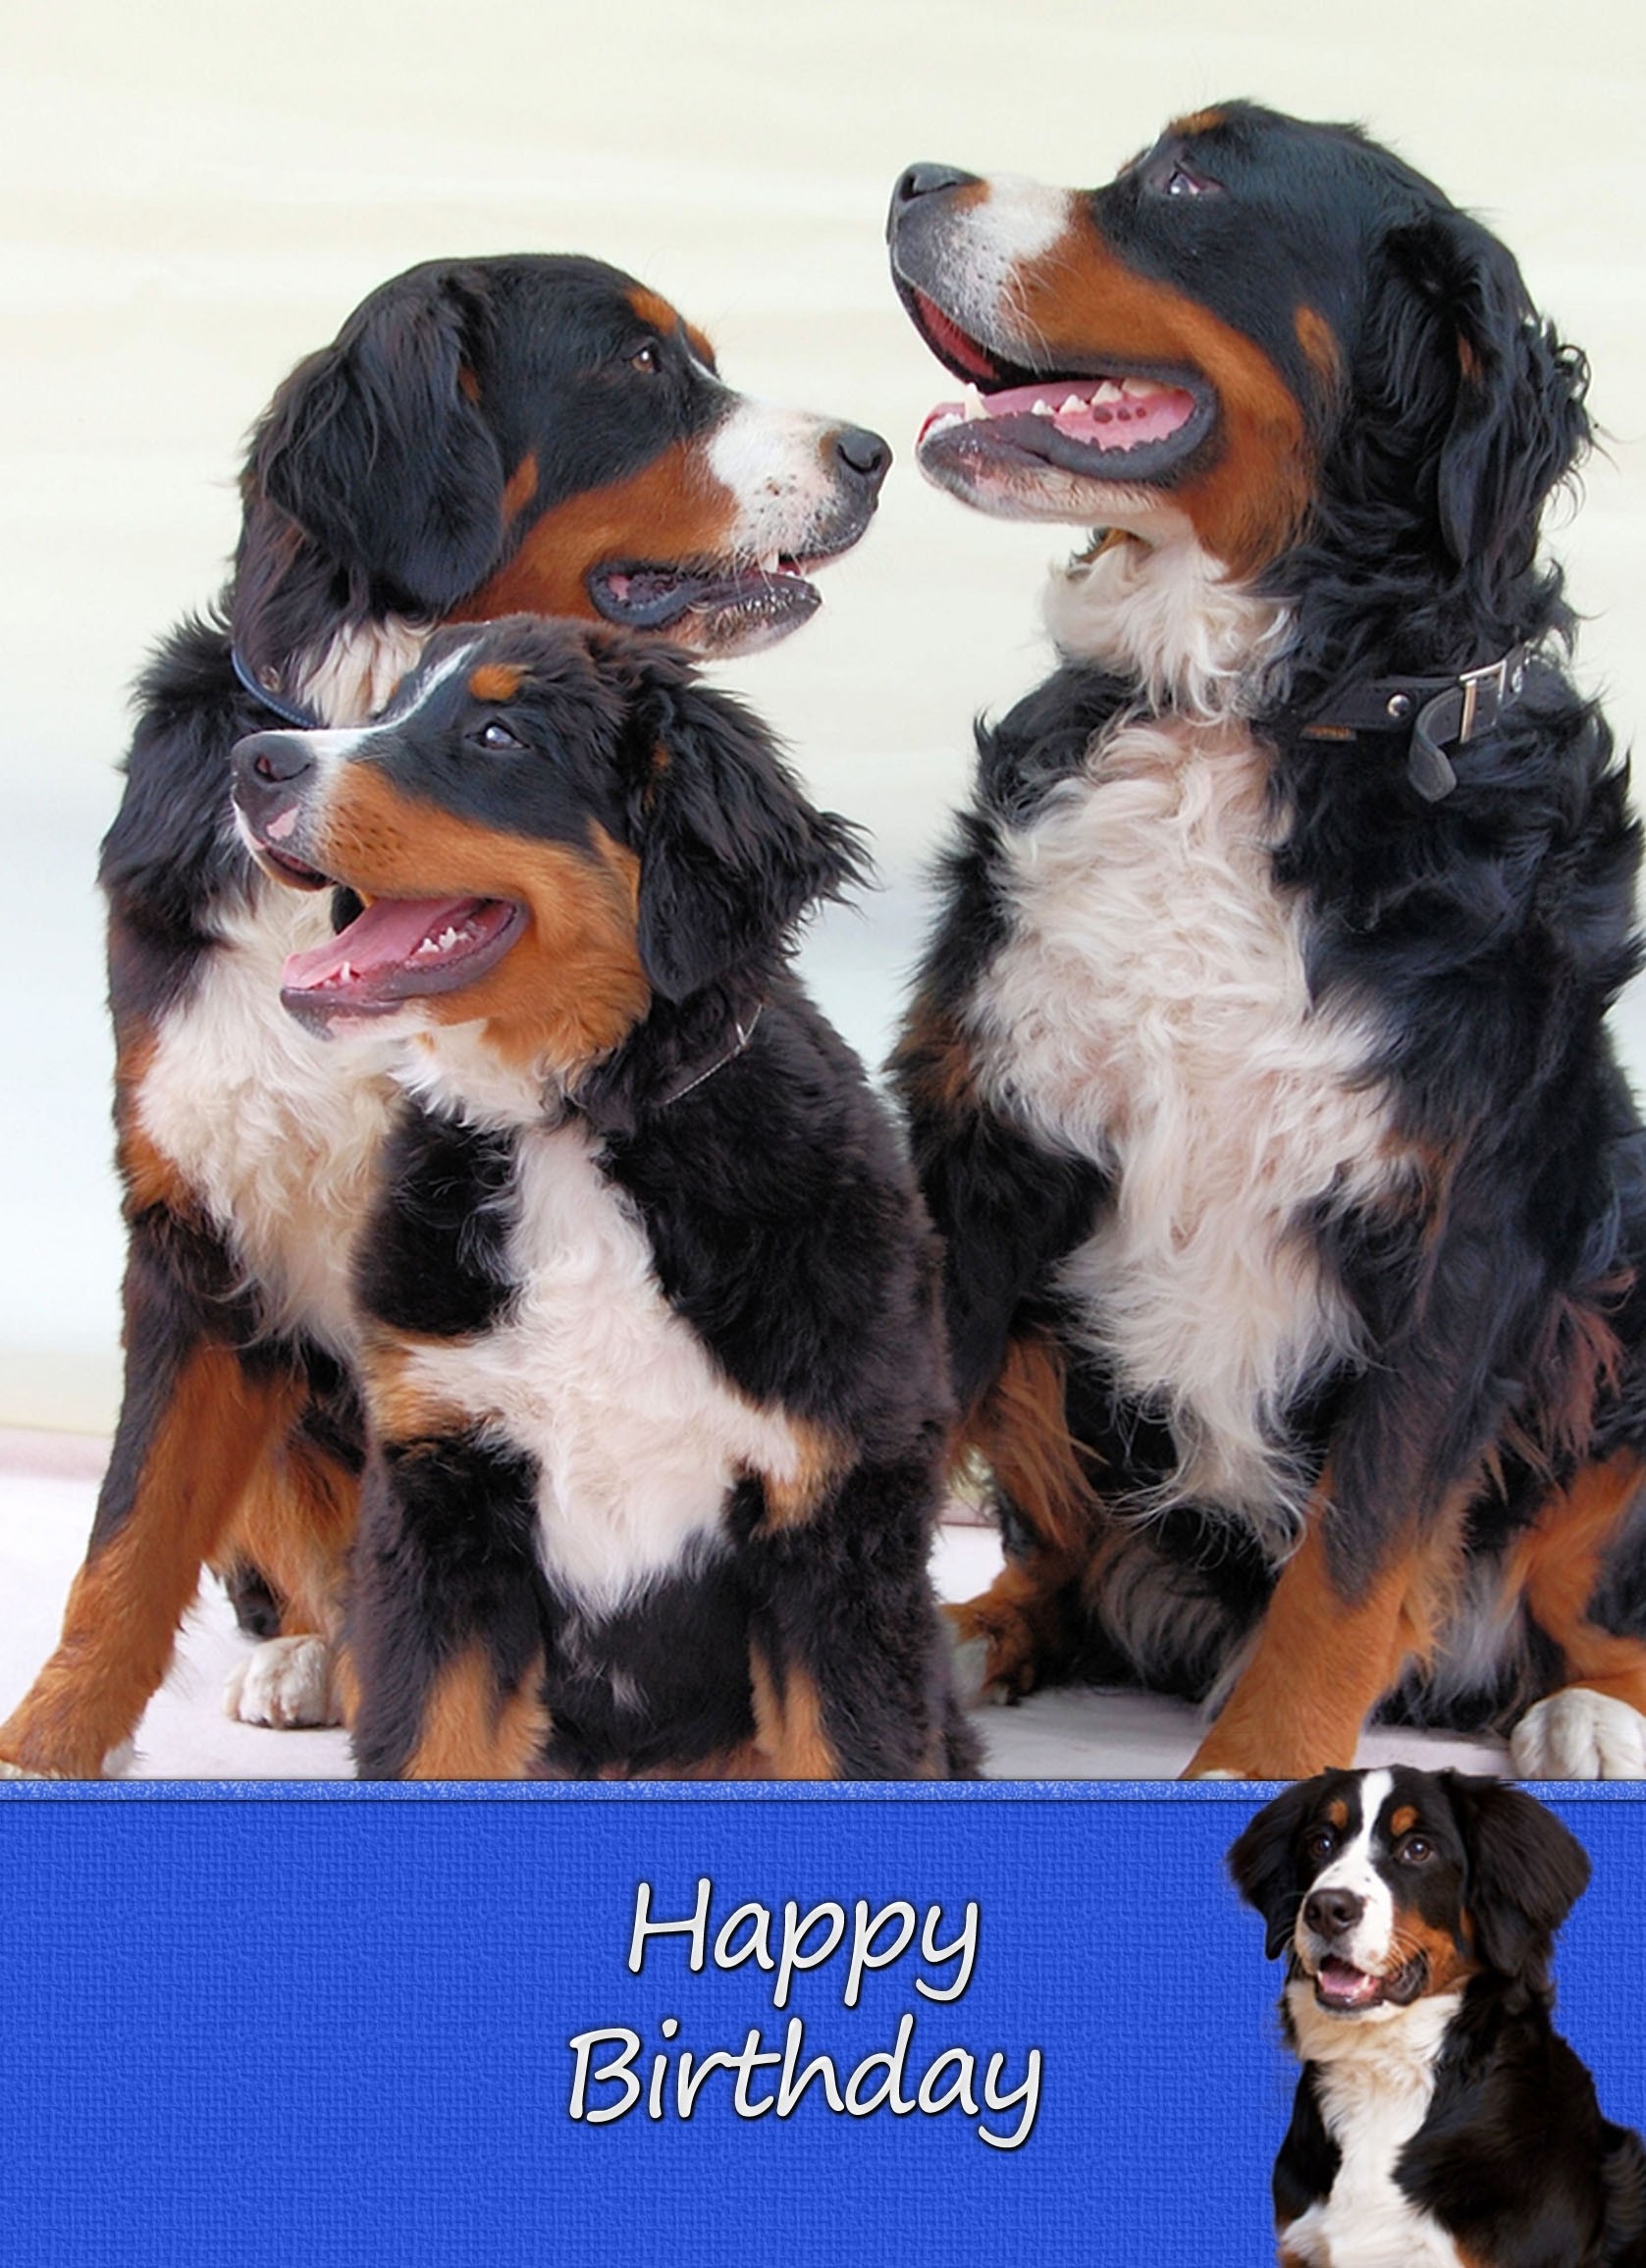 Bernese Mountain Dog Birthday Card